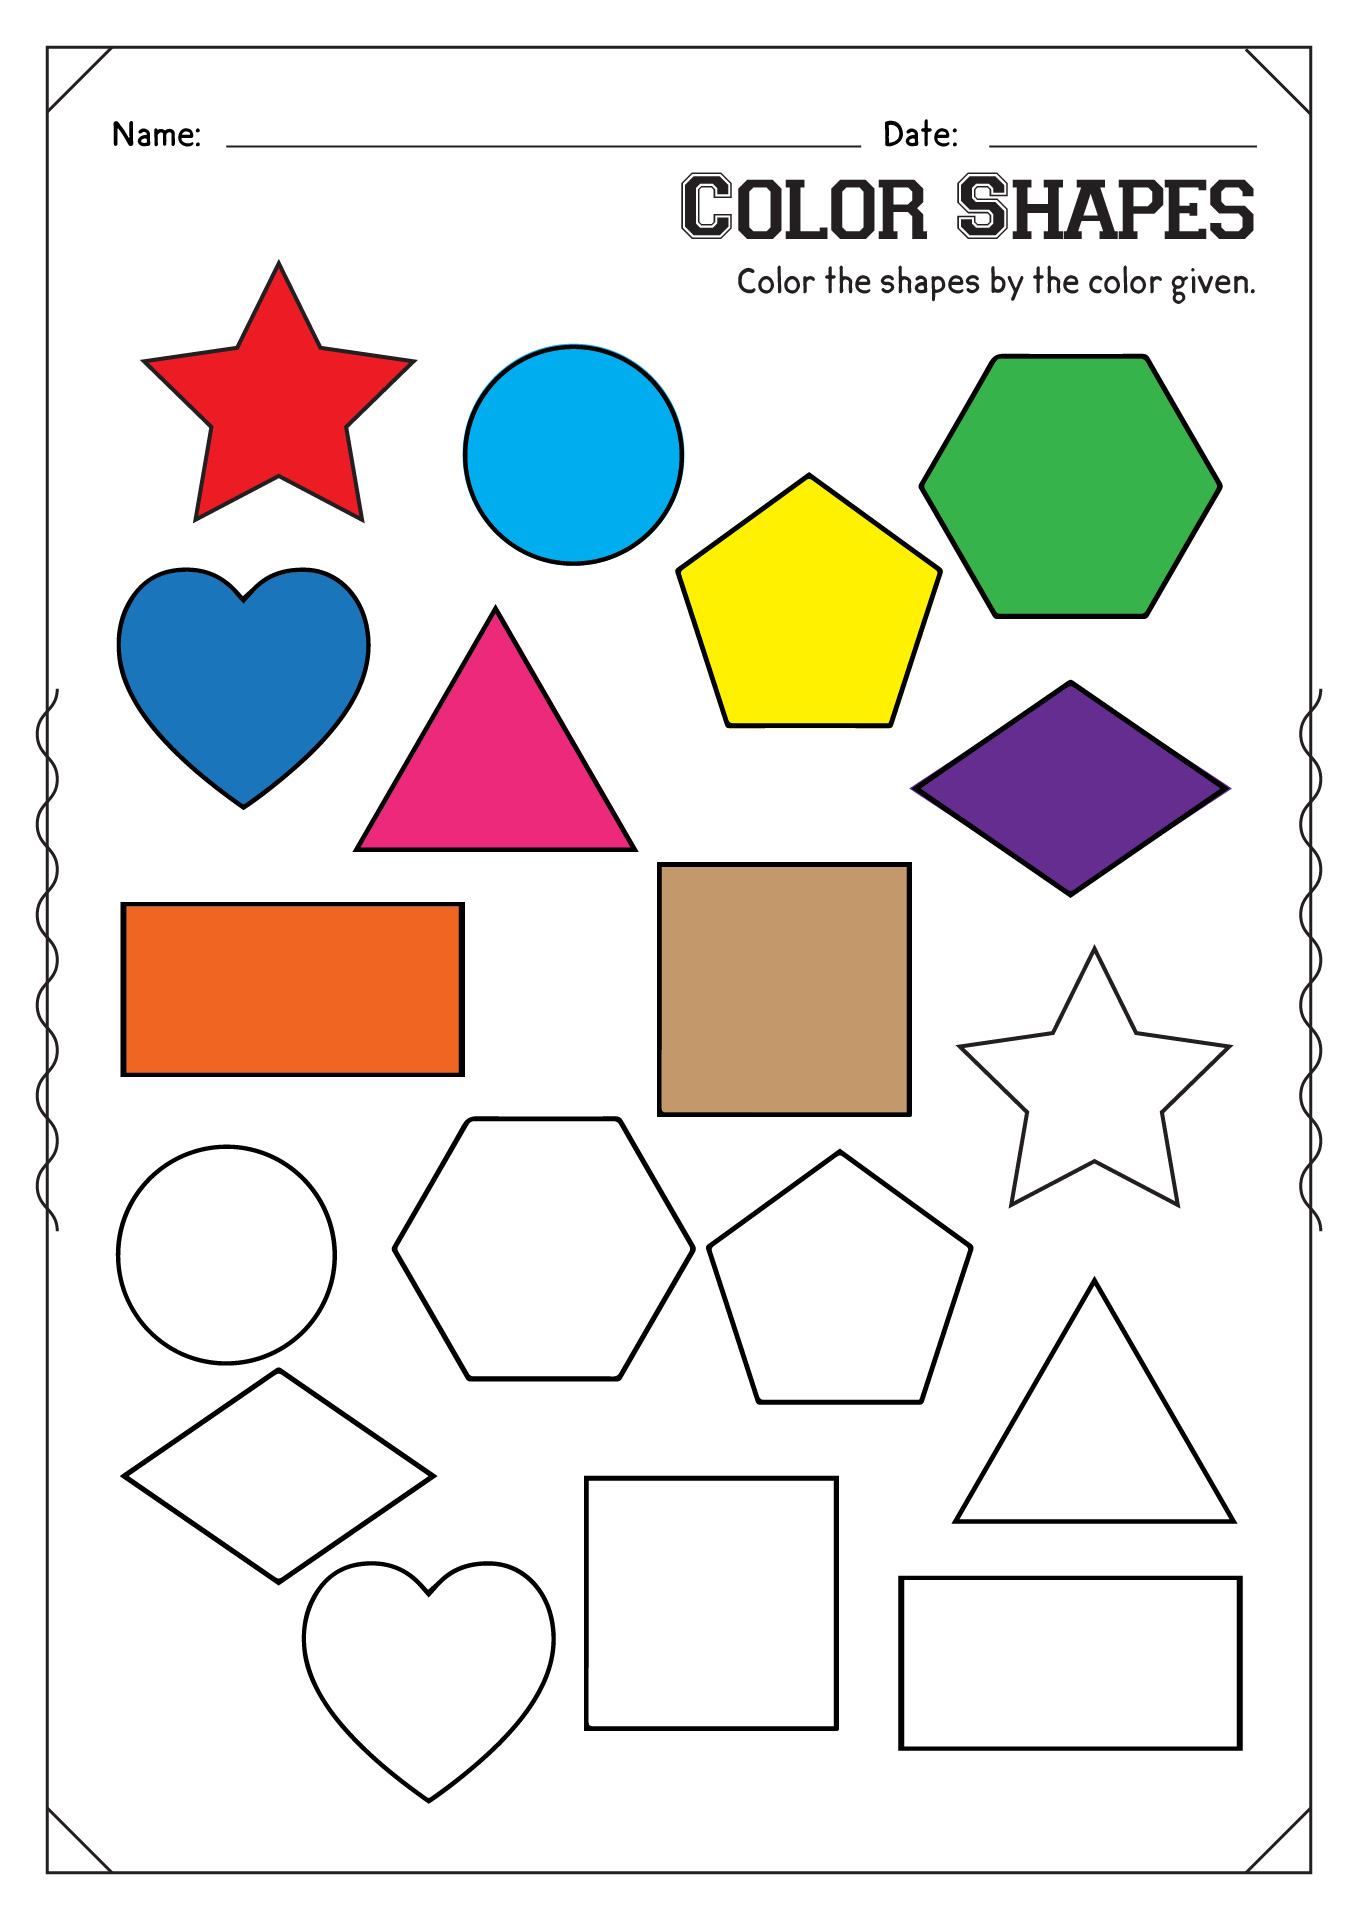 Color and Shapes Worksheets for Kids Image